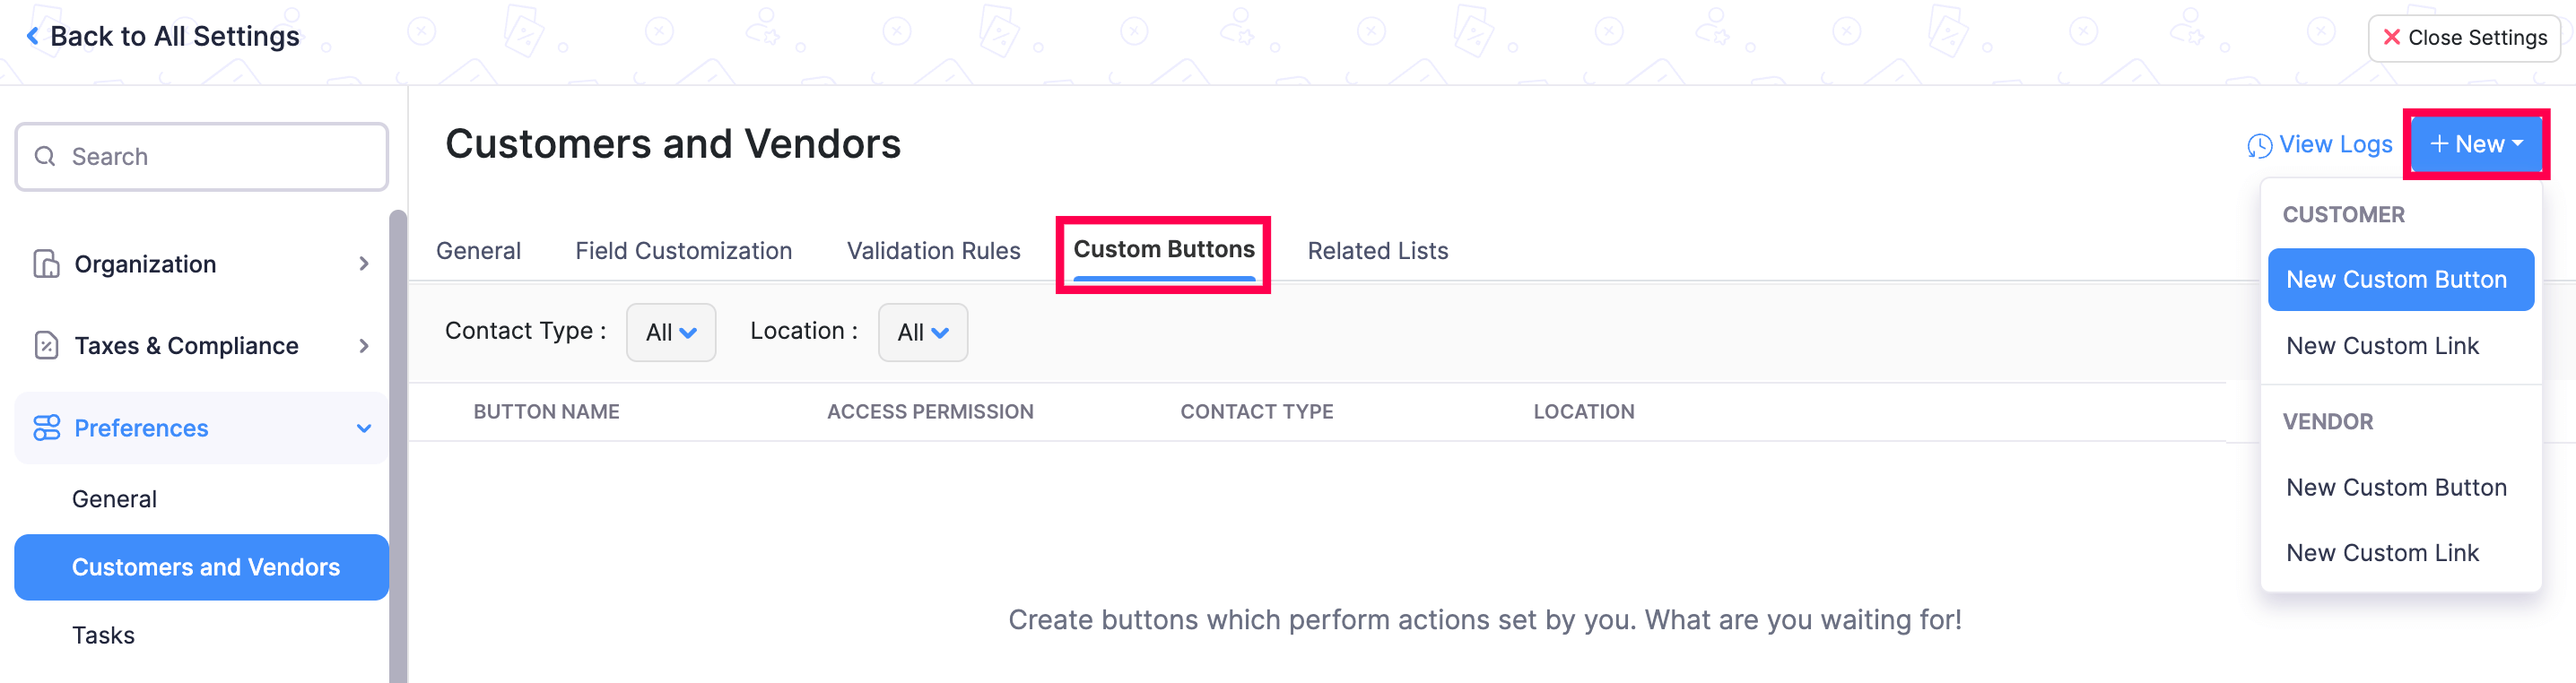 New Custom Button